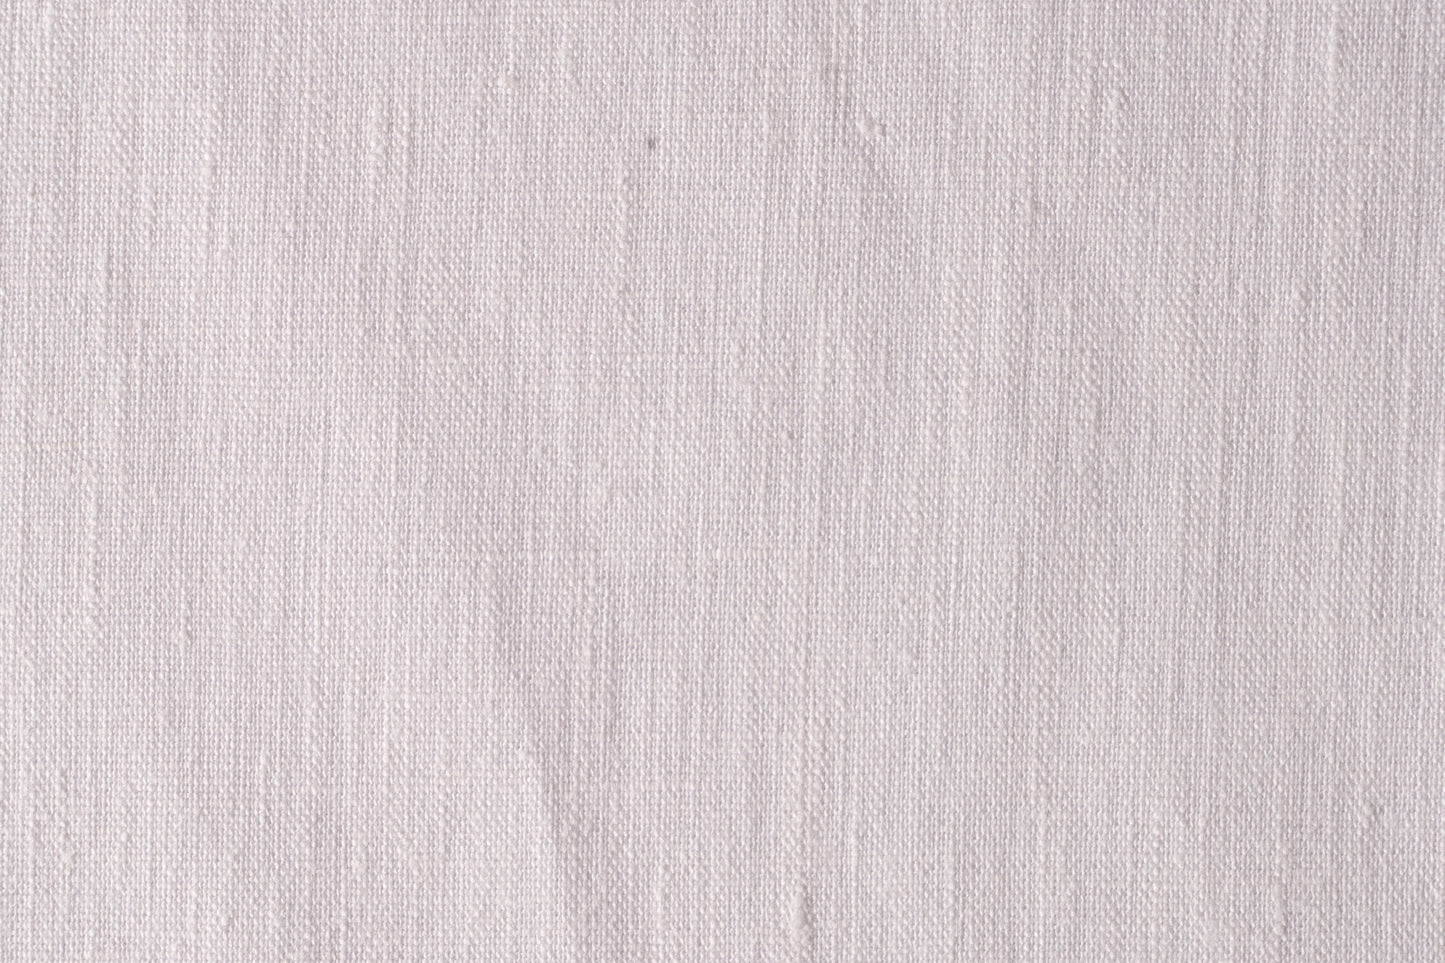 100% Stonewashed Linen Medium Weight Fabric by the Yard 7.2 oz Swatch